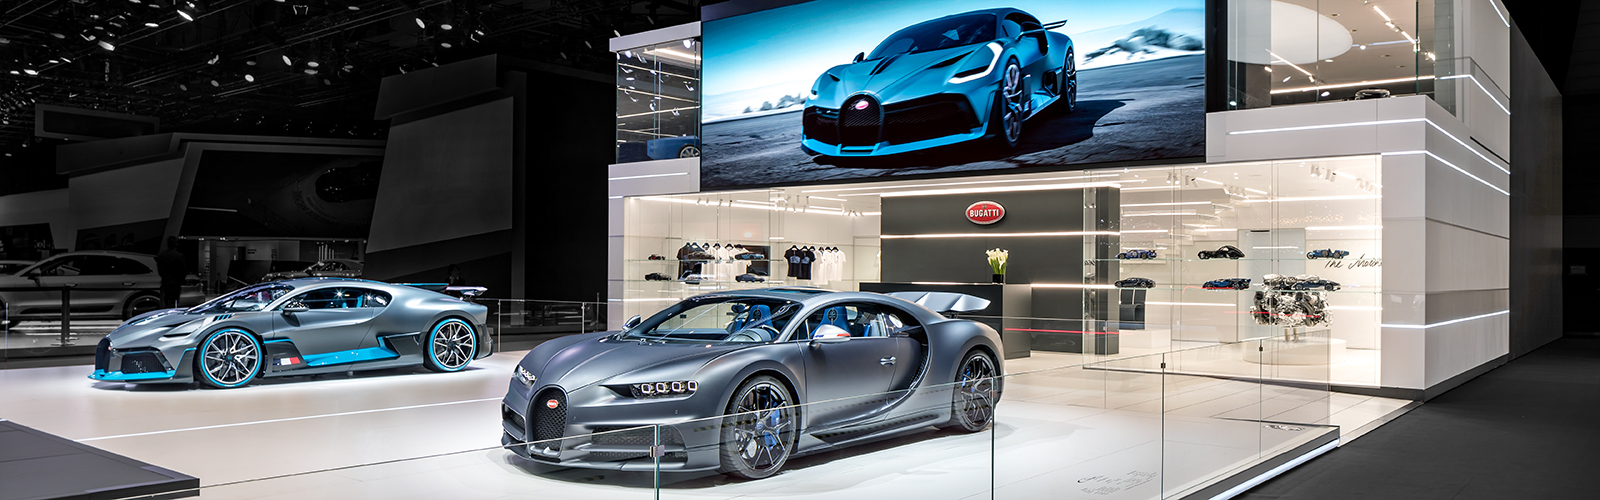 Braunwagner Bugatti Geneva Motorshow Design 2019